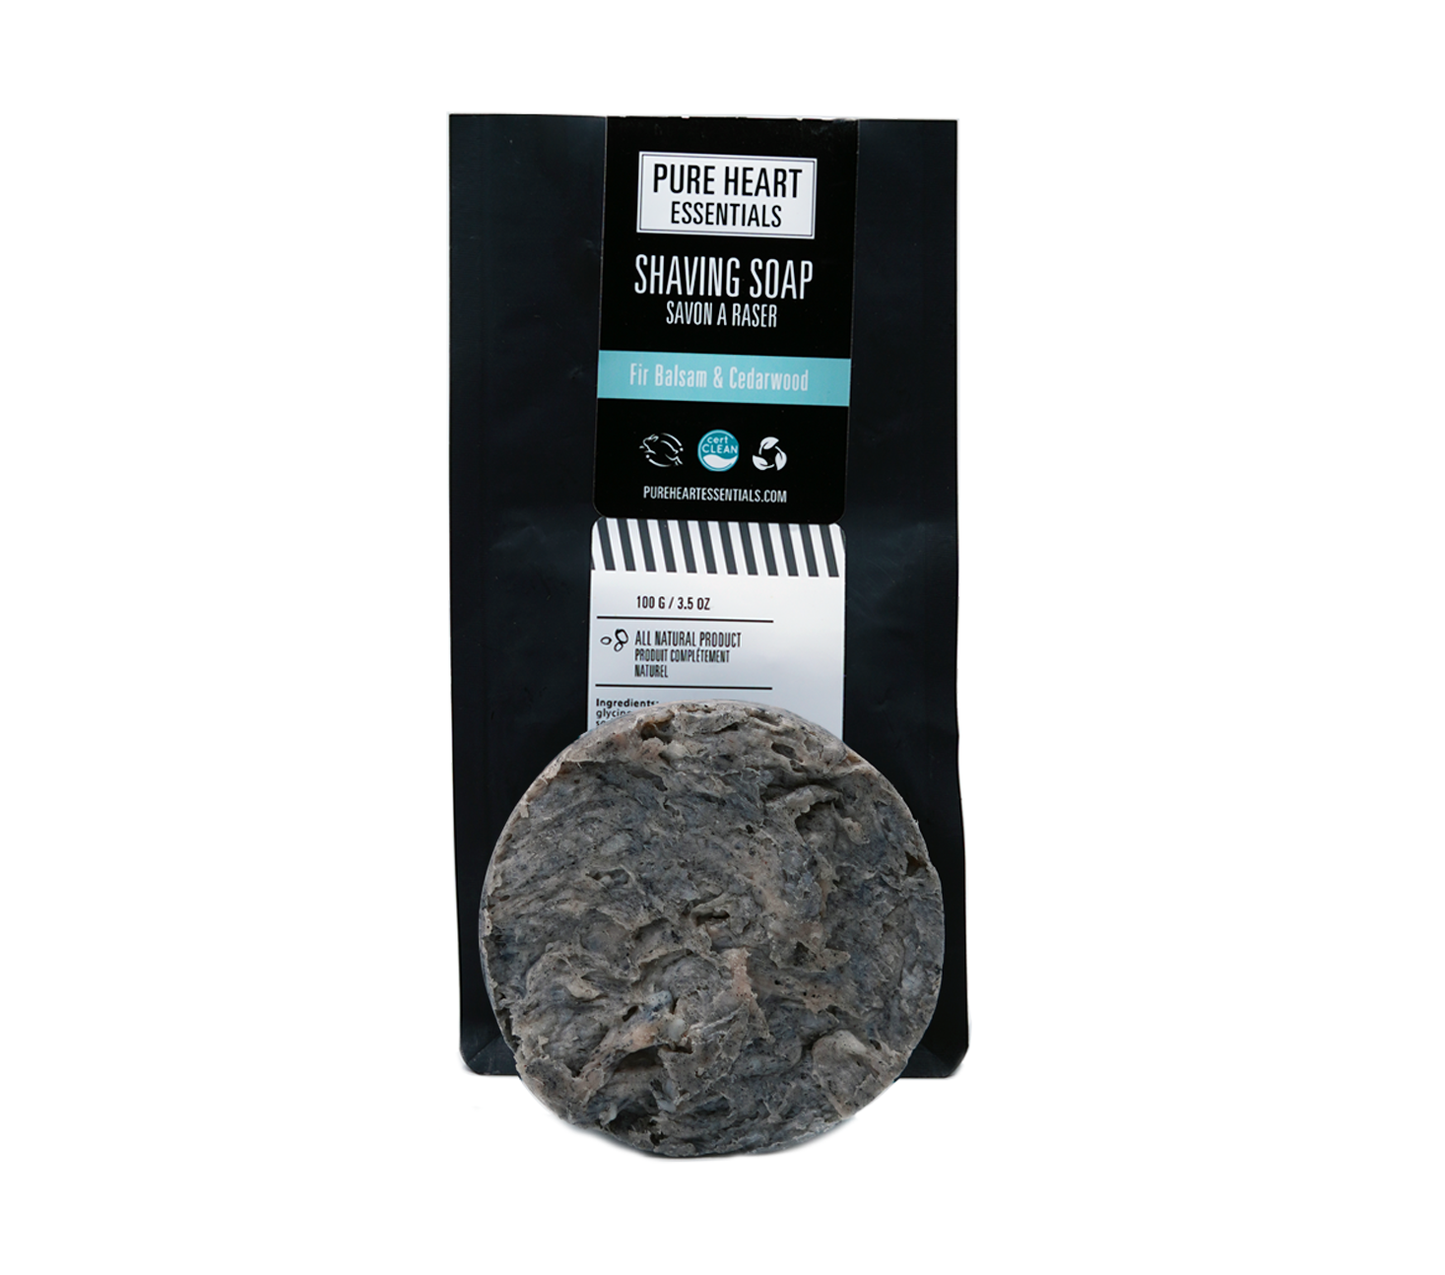 Pure Heart Essentials - WASH - Shaving Soap - Fir Balsam & Cedarwood with packaging